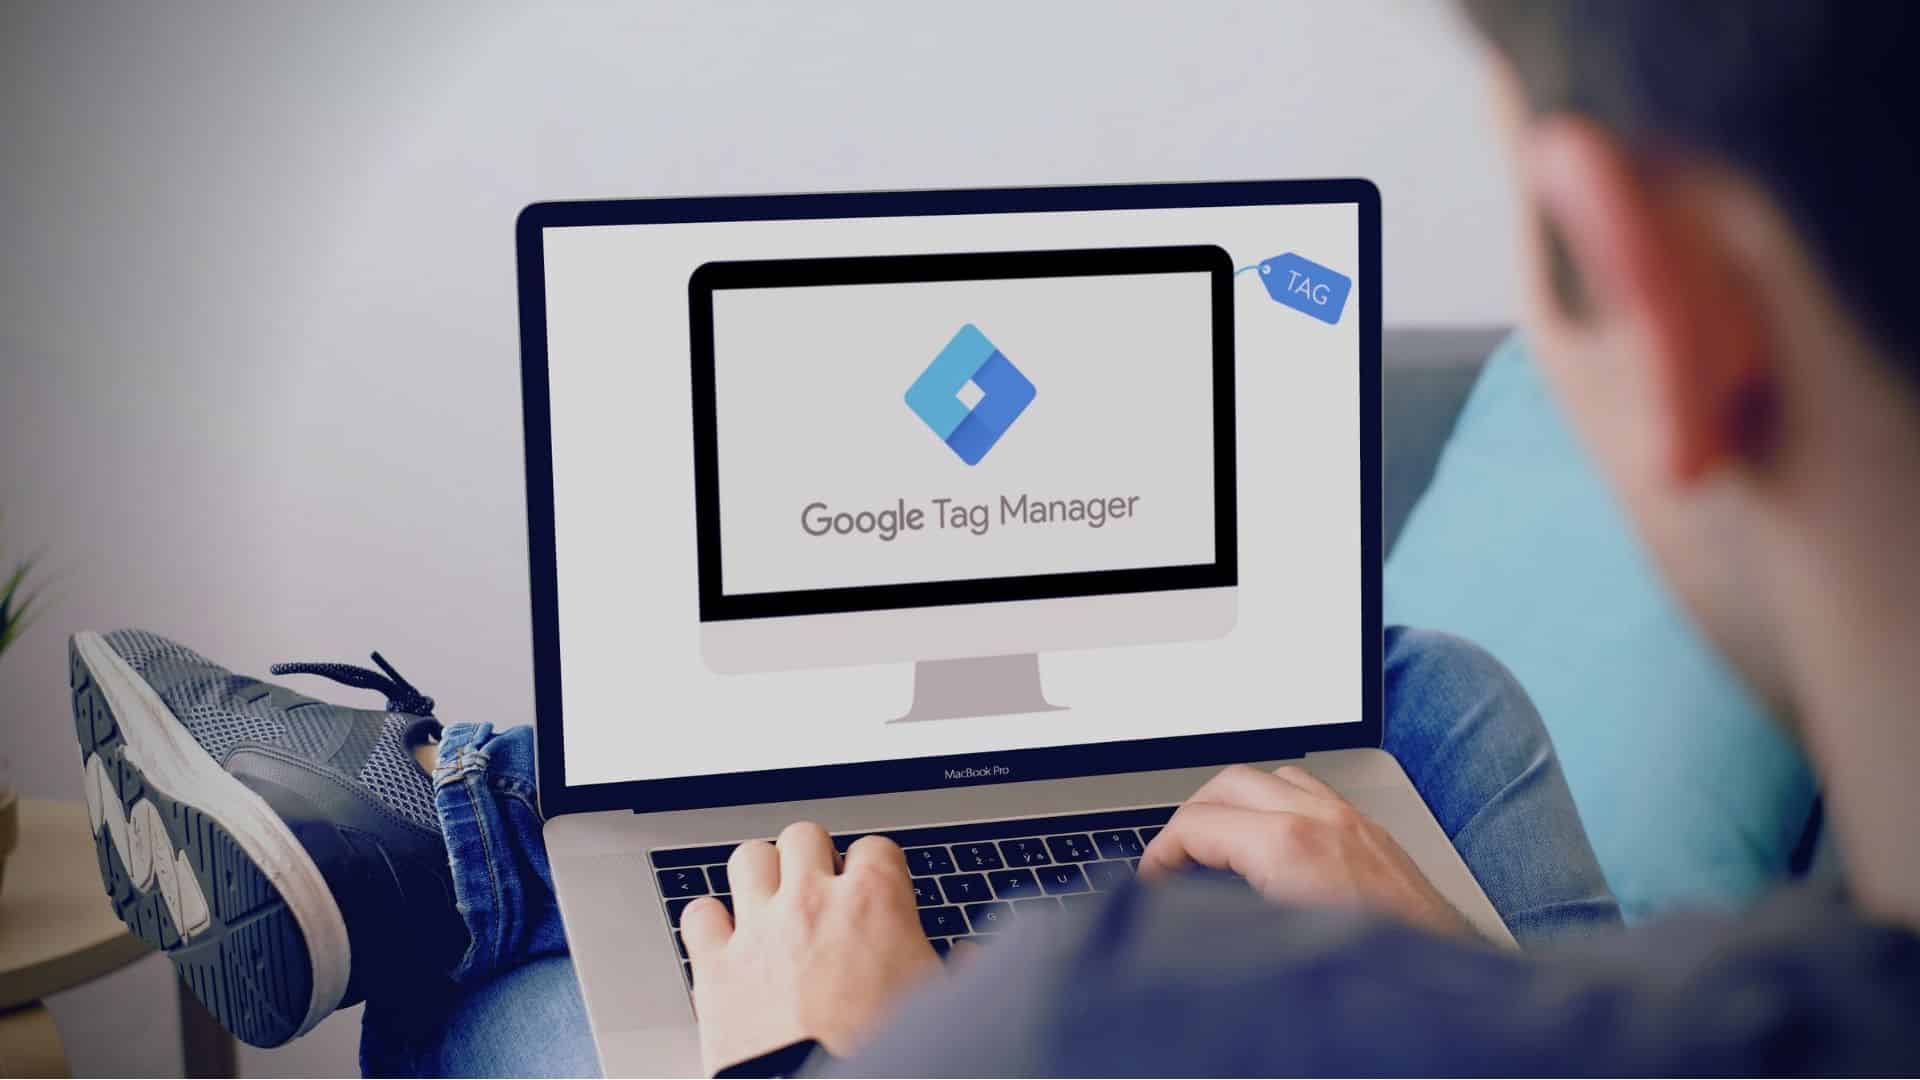 Utiliser Google Tag Manager avec son site web